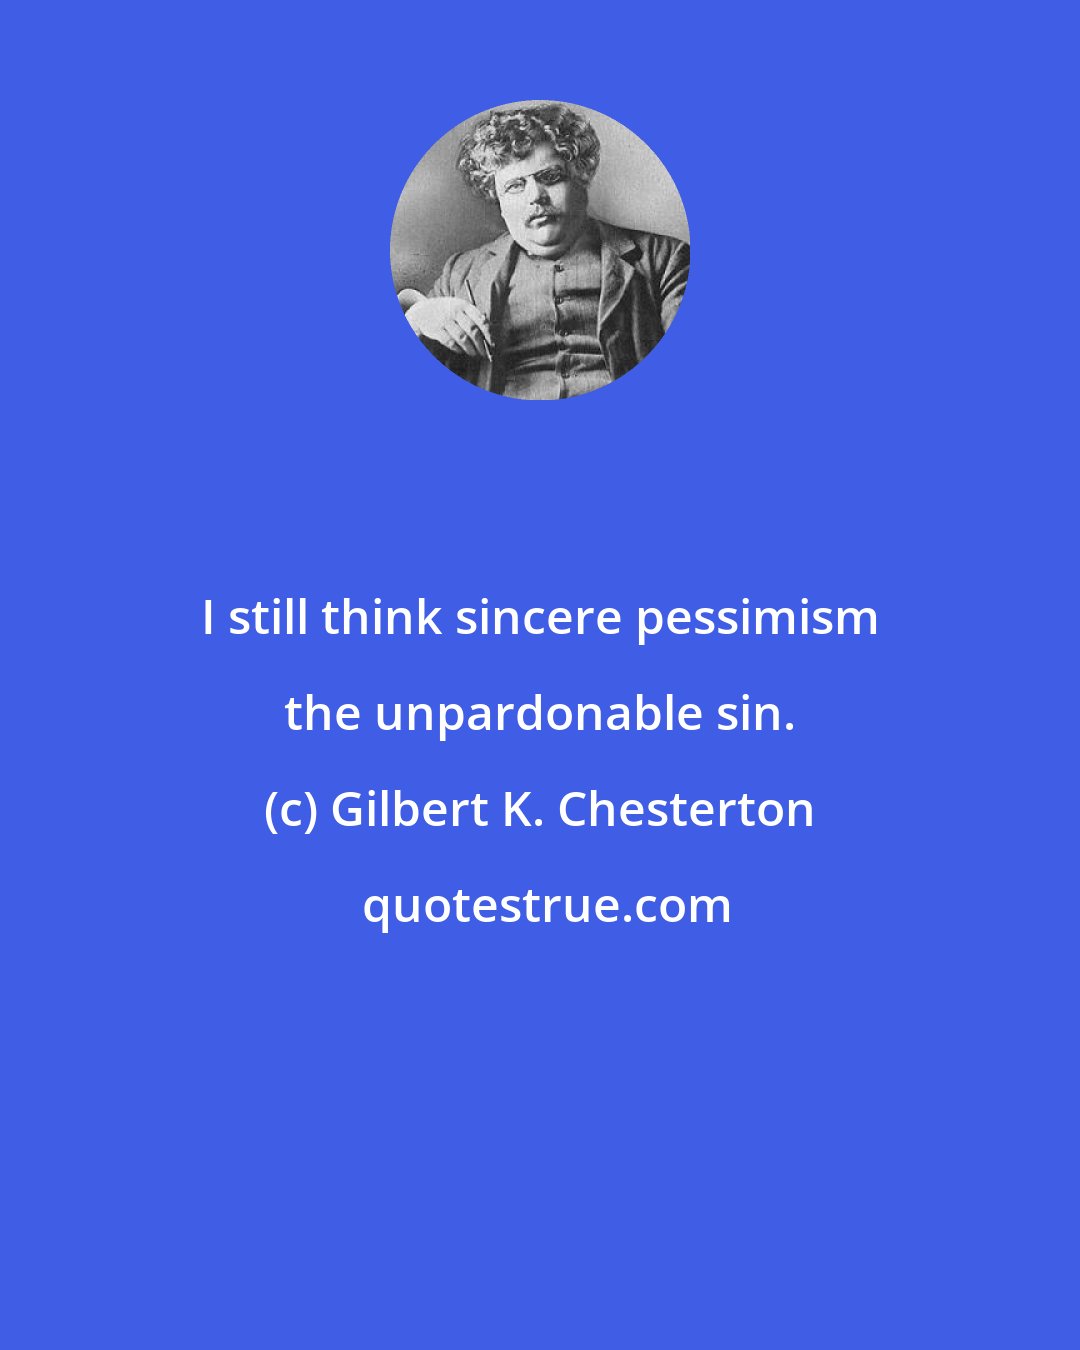 Gilbert K. Chesterton: I still think sincere pessimism the unpardonable sin.